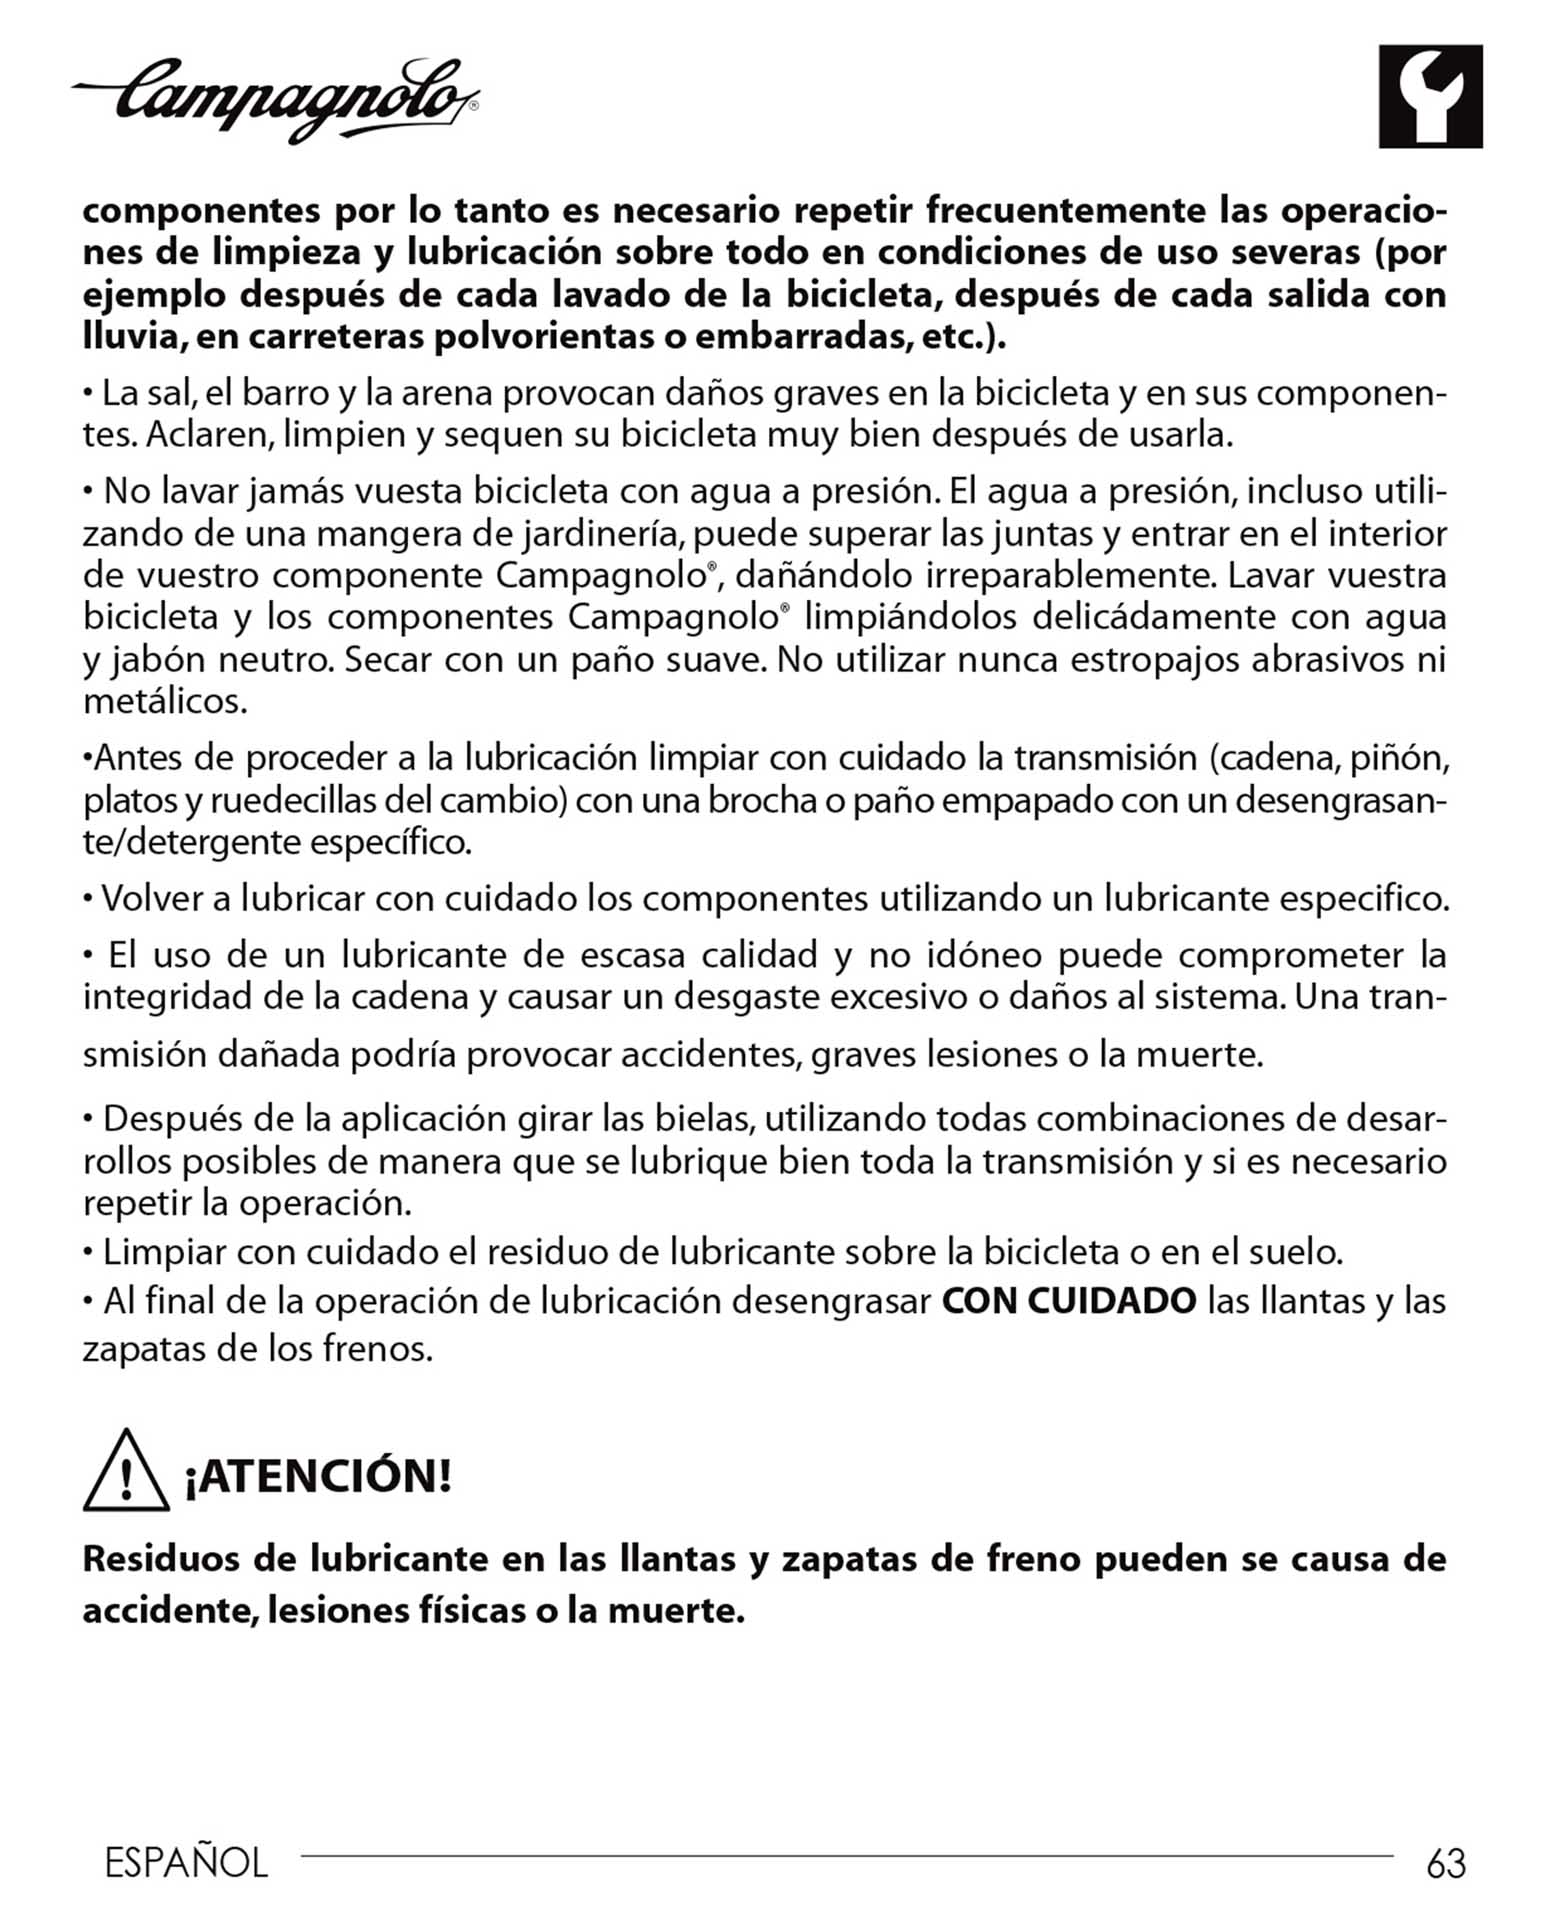 Campagnolo instructions - 7225475 Rear Derailleur ('12/2009') page 063 main image